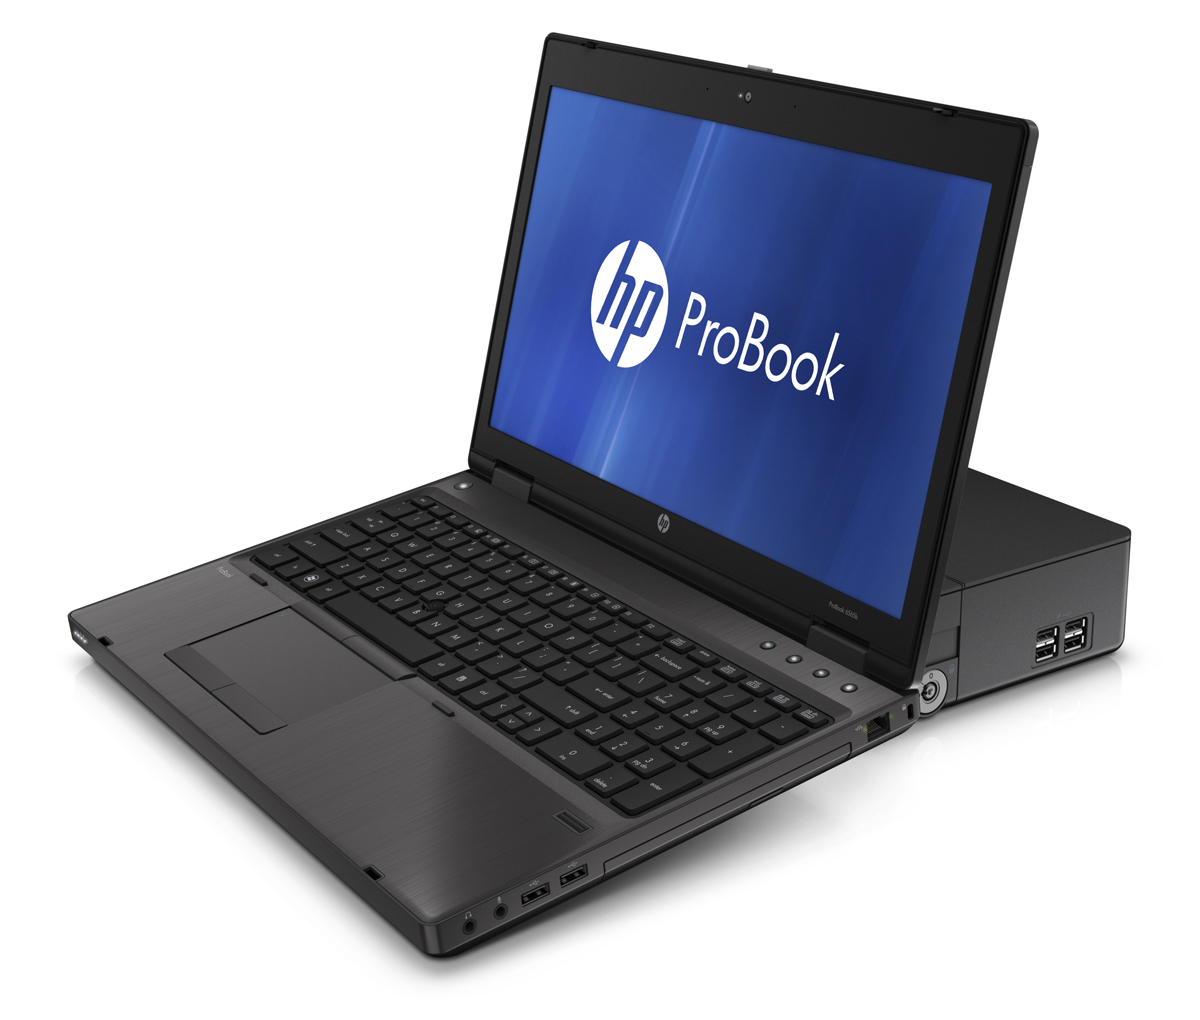 Intel Amd In Hp Notebook Smackdown • The Register